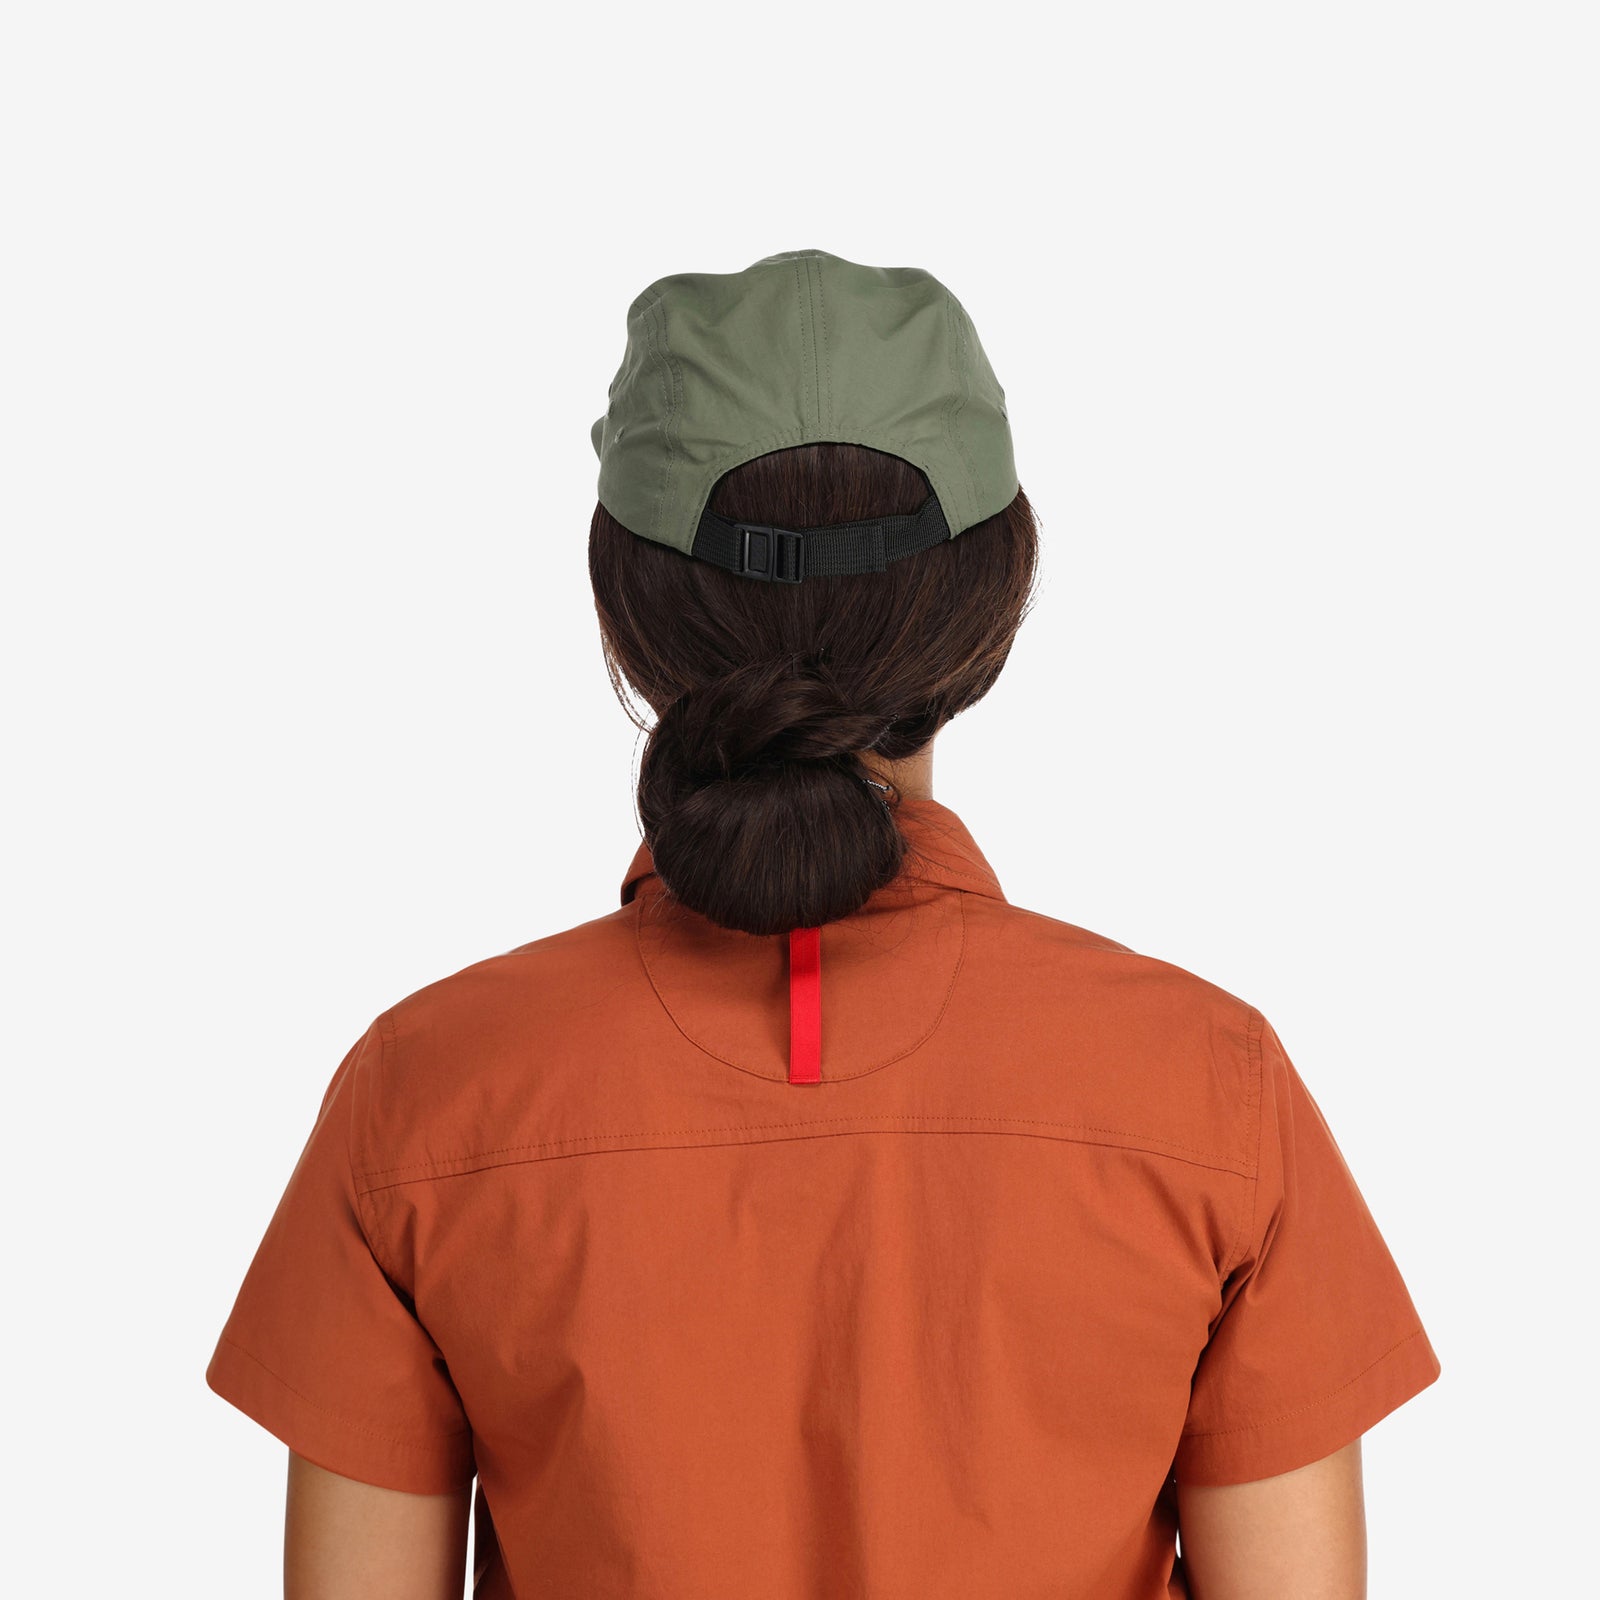 Back shot of model wearing Topo Designs Nylon Camp 5-panel flat brim Hat in "olive" green.